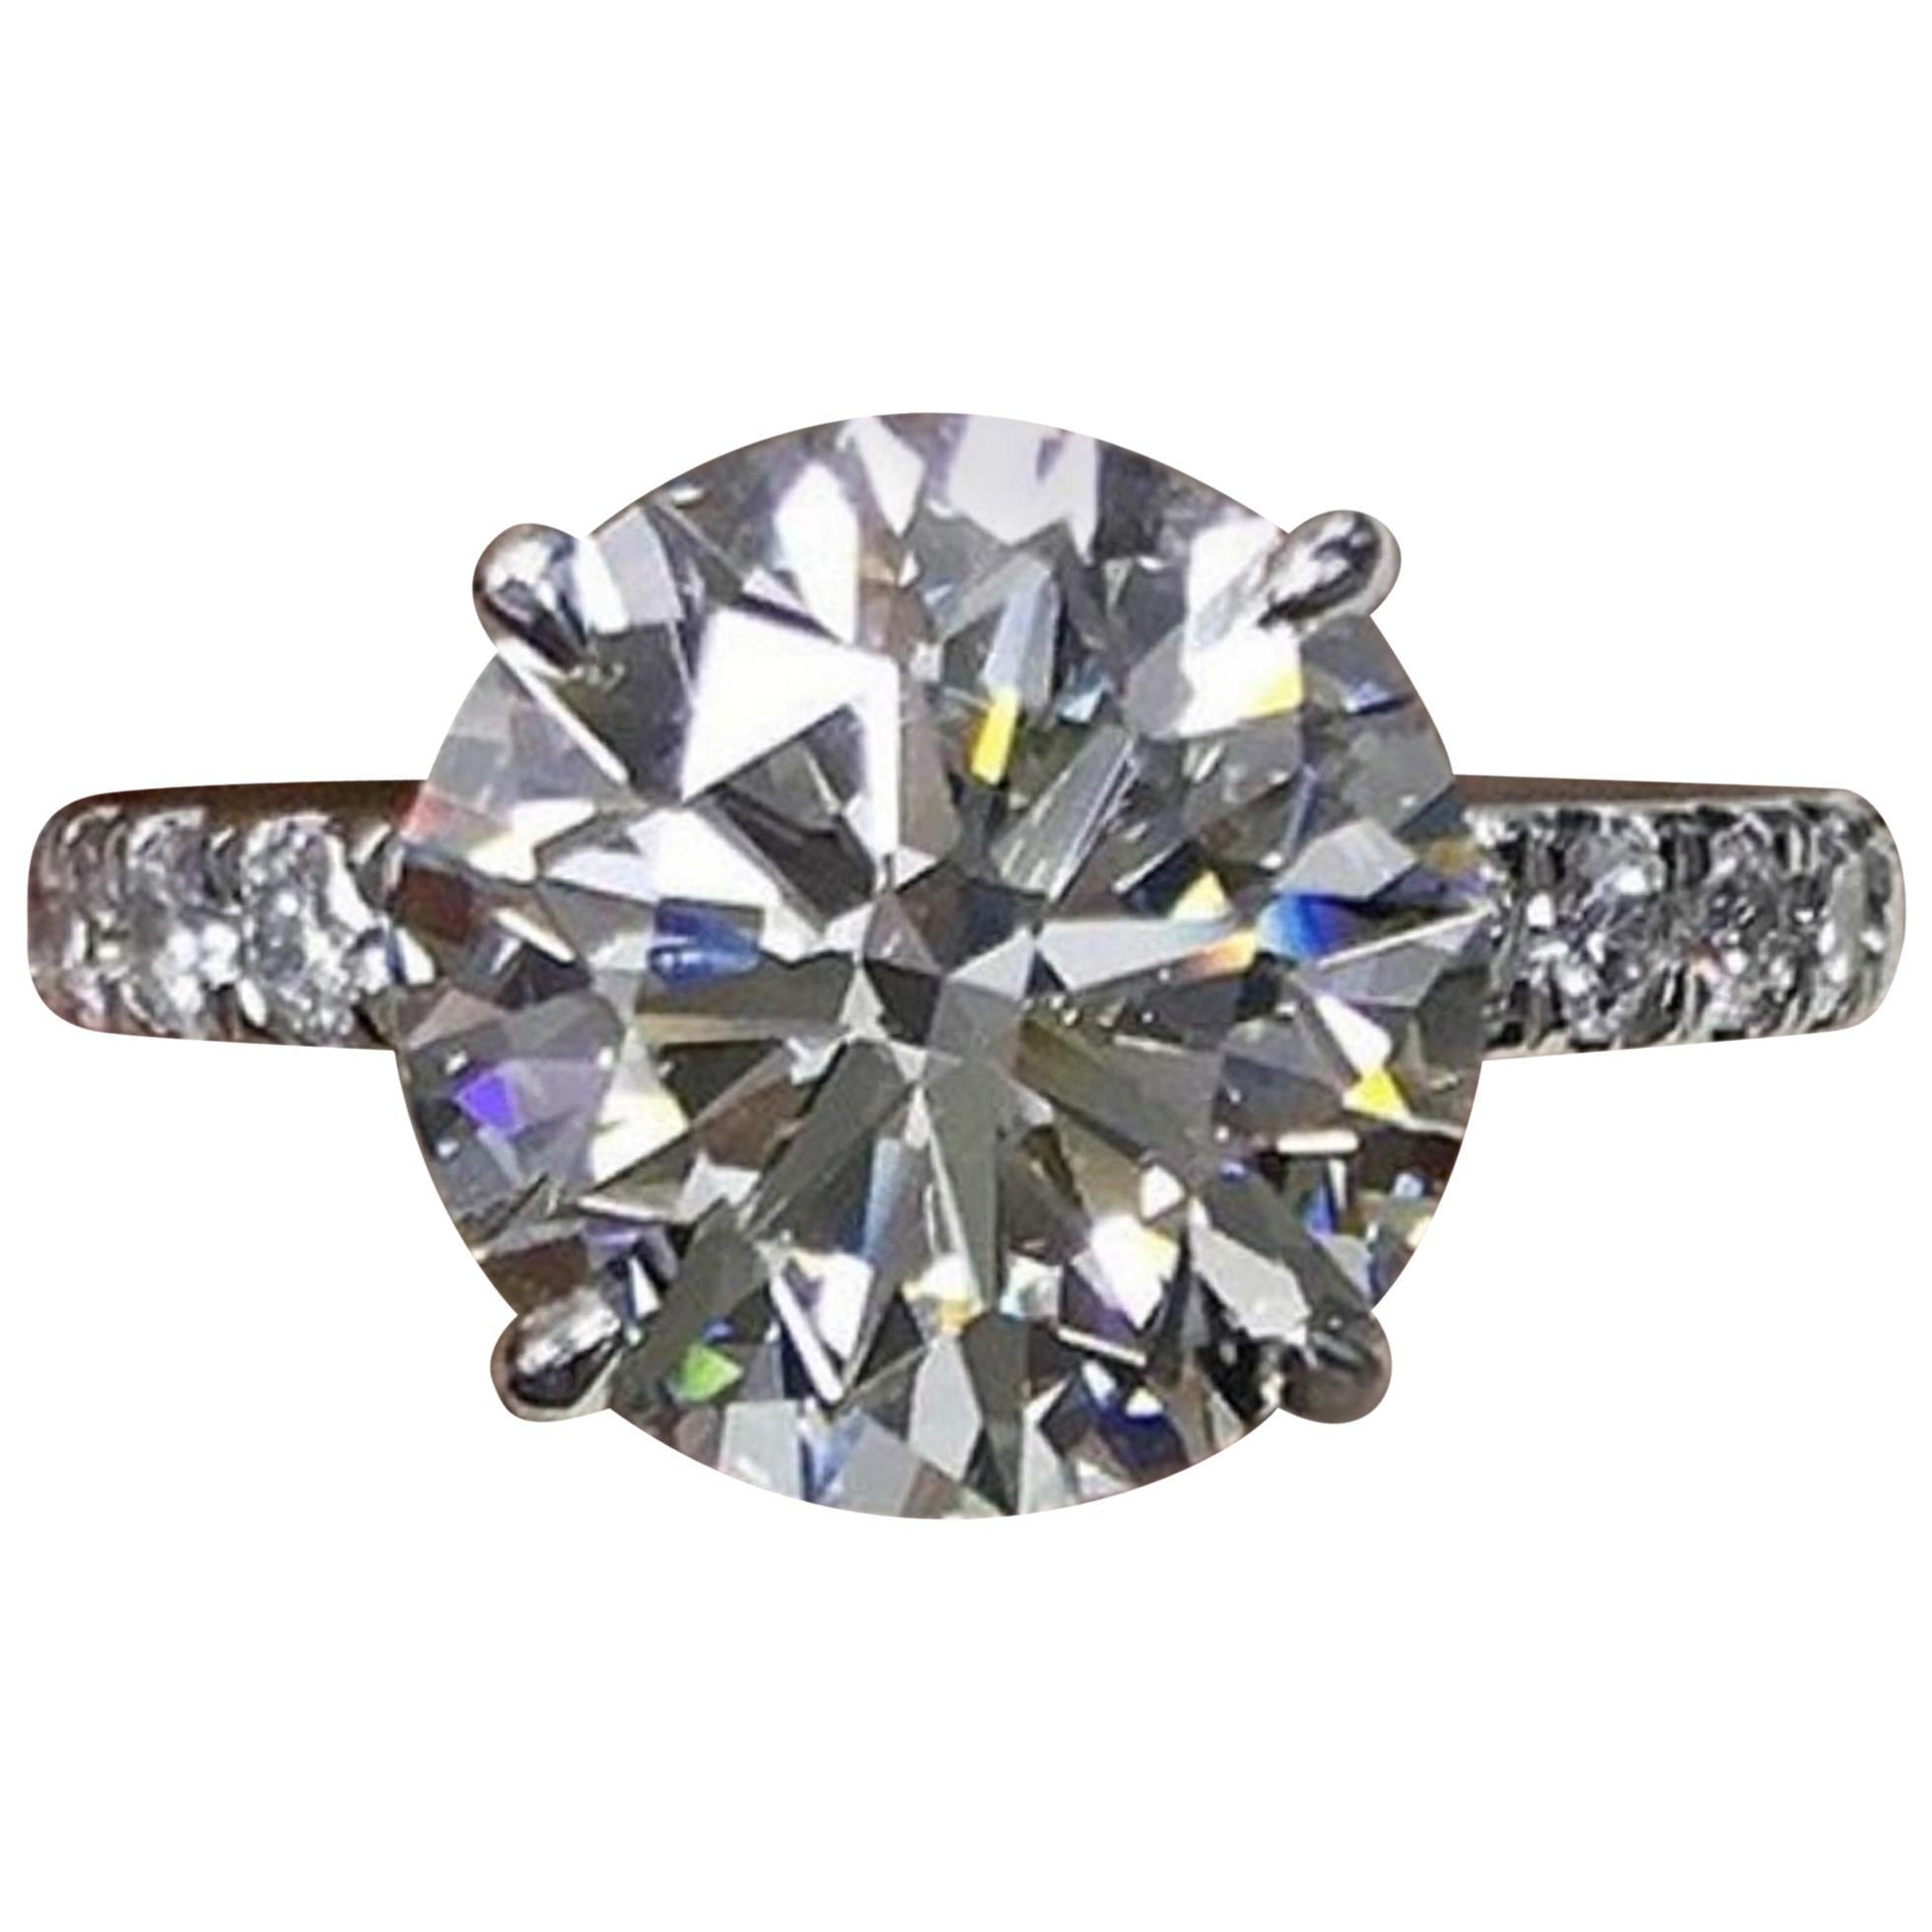 GIA Certified 6.15 Carat Round Brilliant Cut Diamond Ring